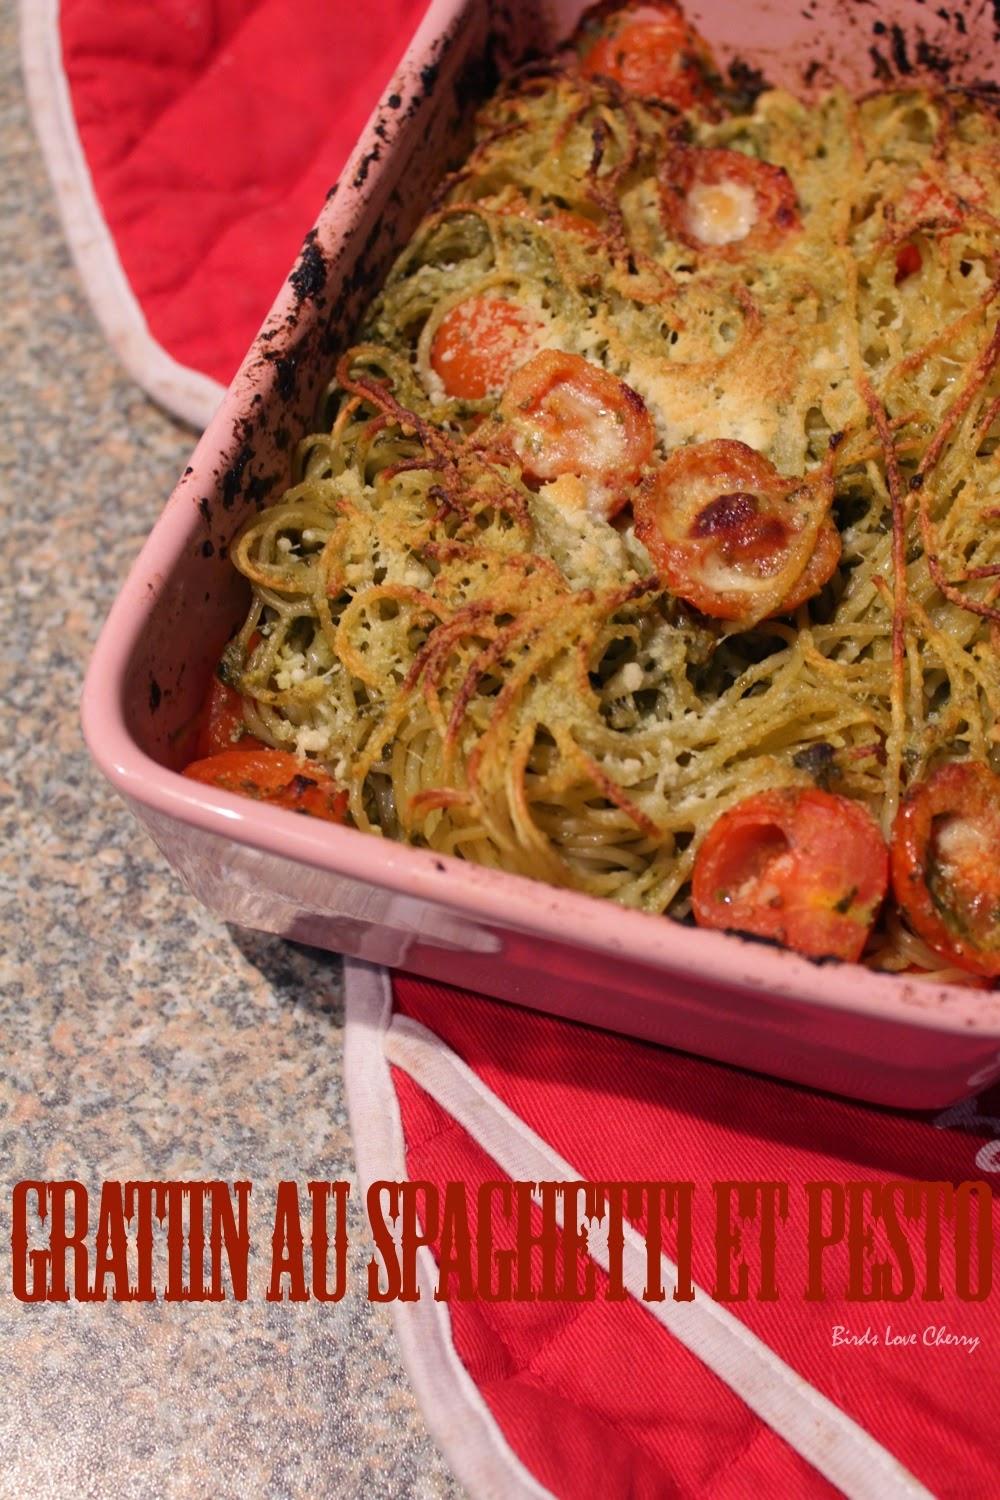 Gratin de spaghetti au pesto et tomates cerises ou la recette de flemmard!